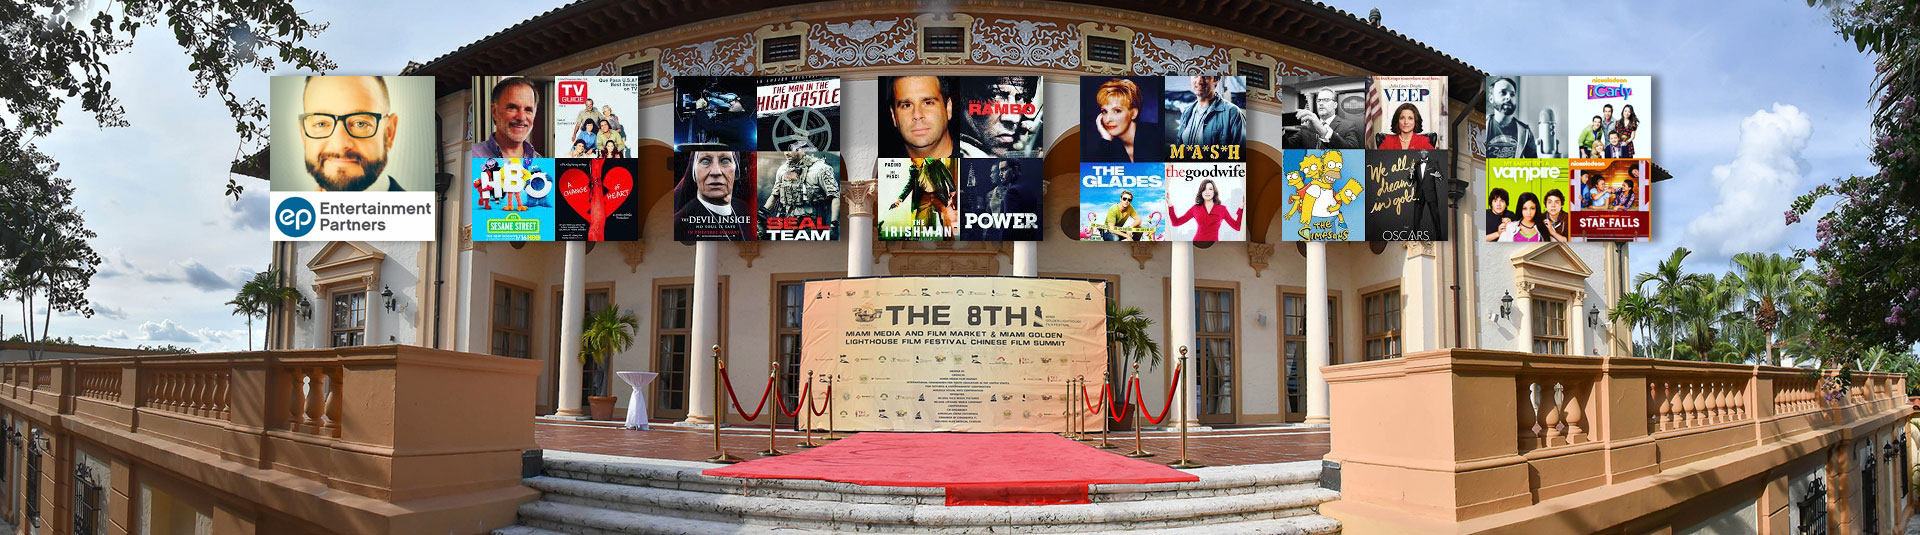 Miami Media and Film Market